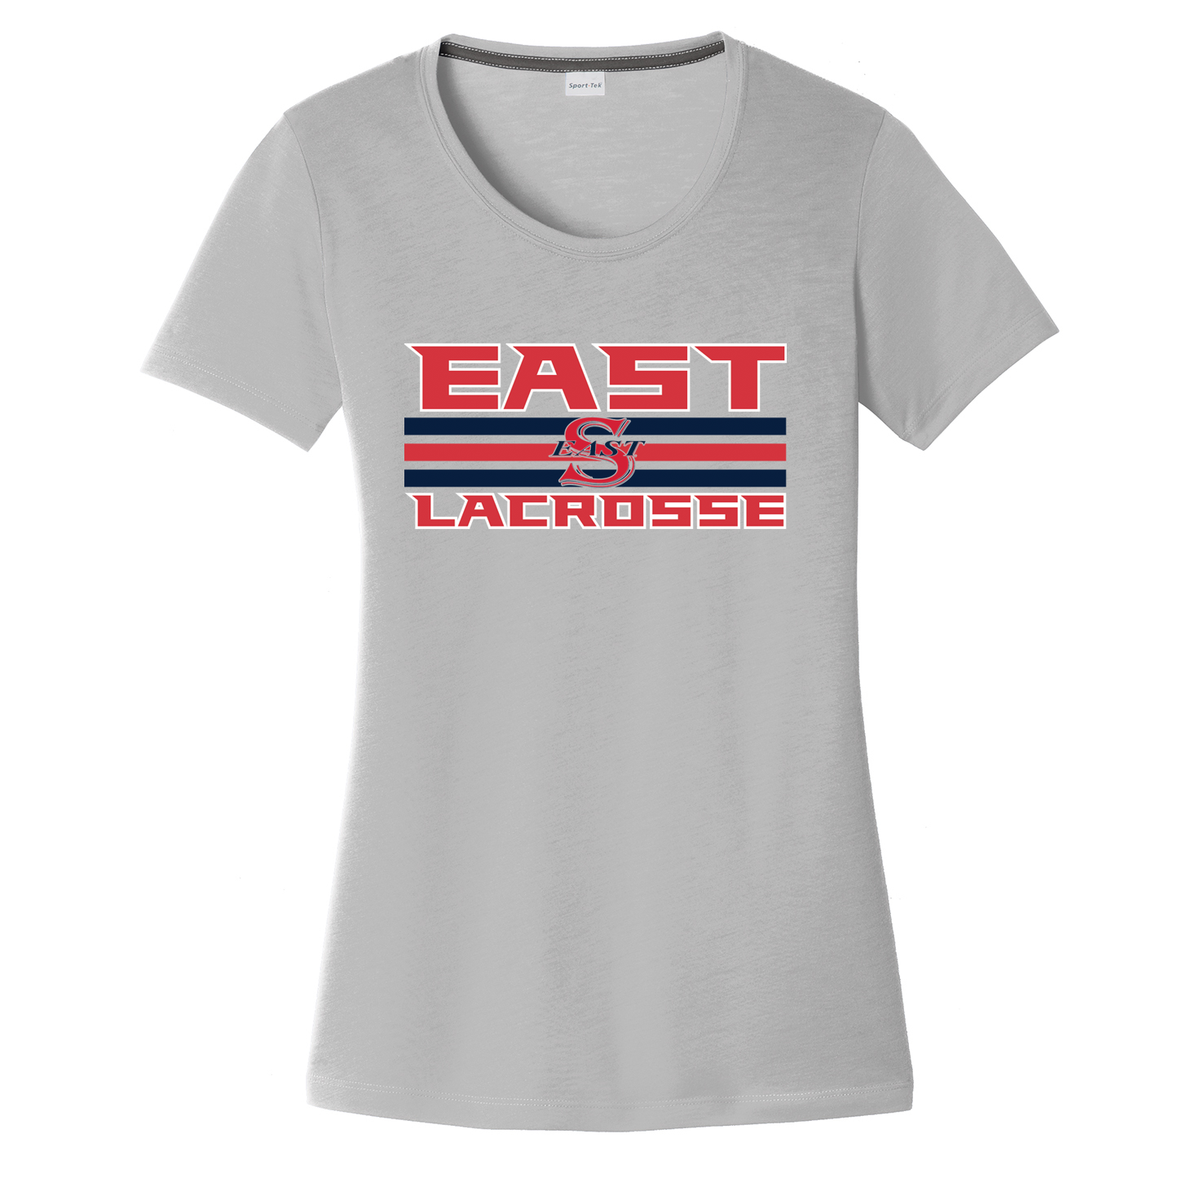 Smithtown East Girls Lacrosse Women's CottonTouch Performance T-Shirt